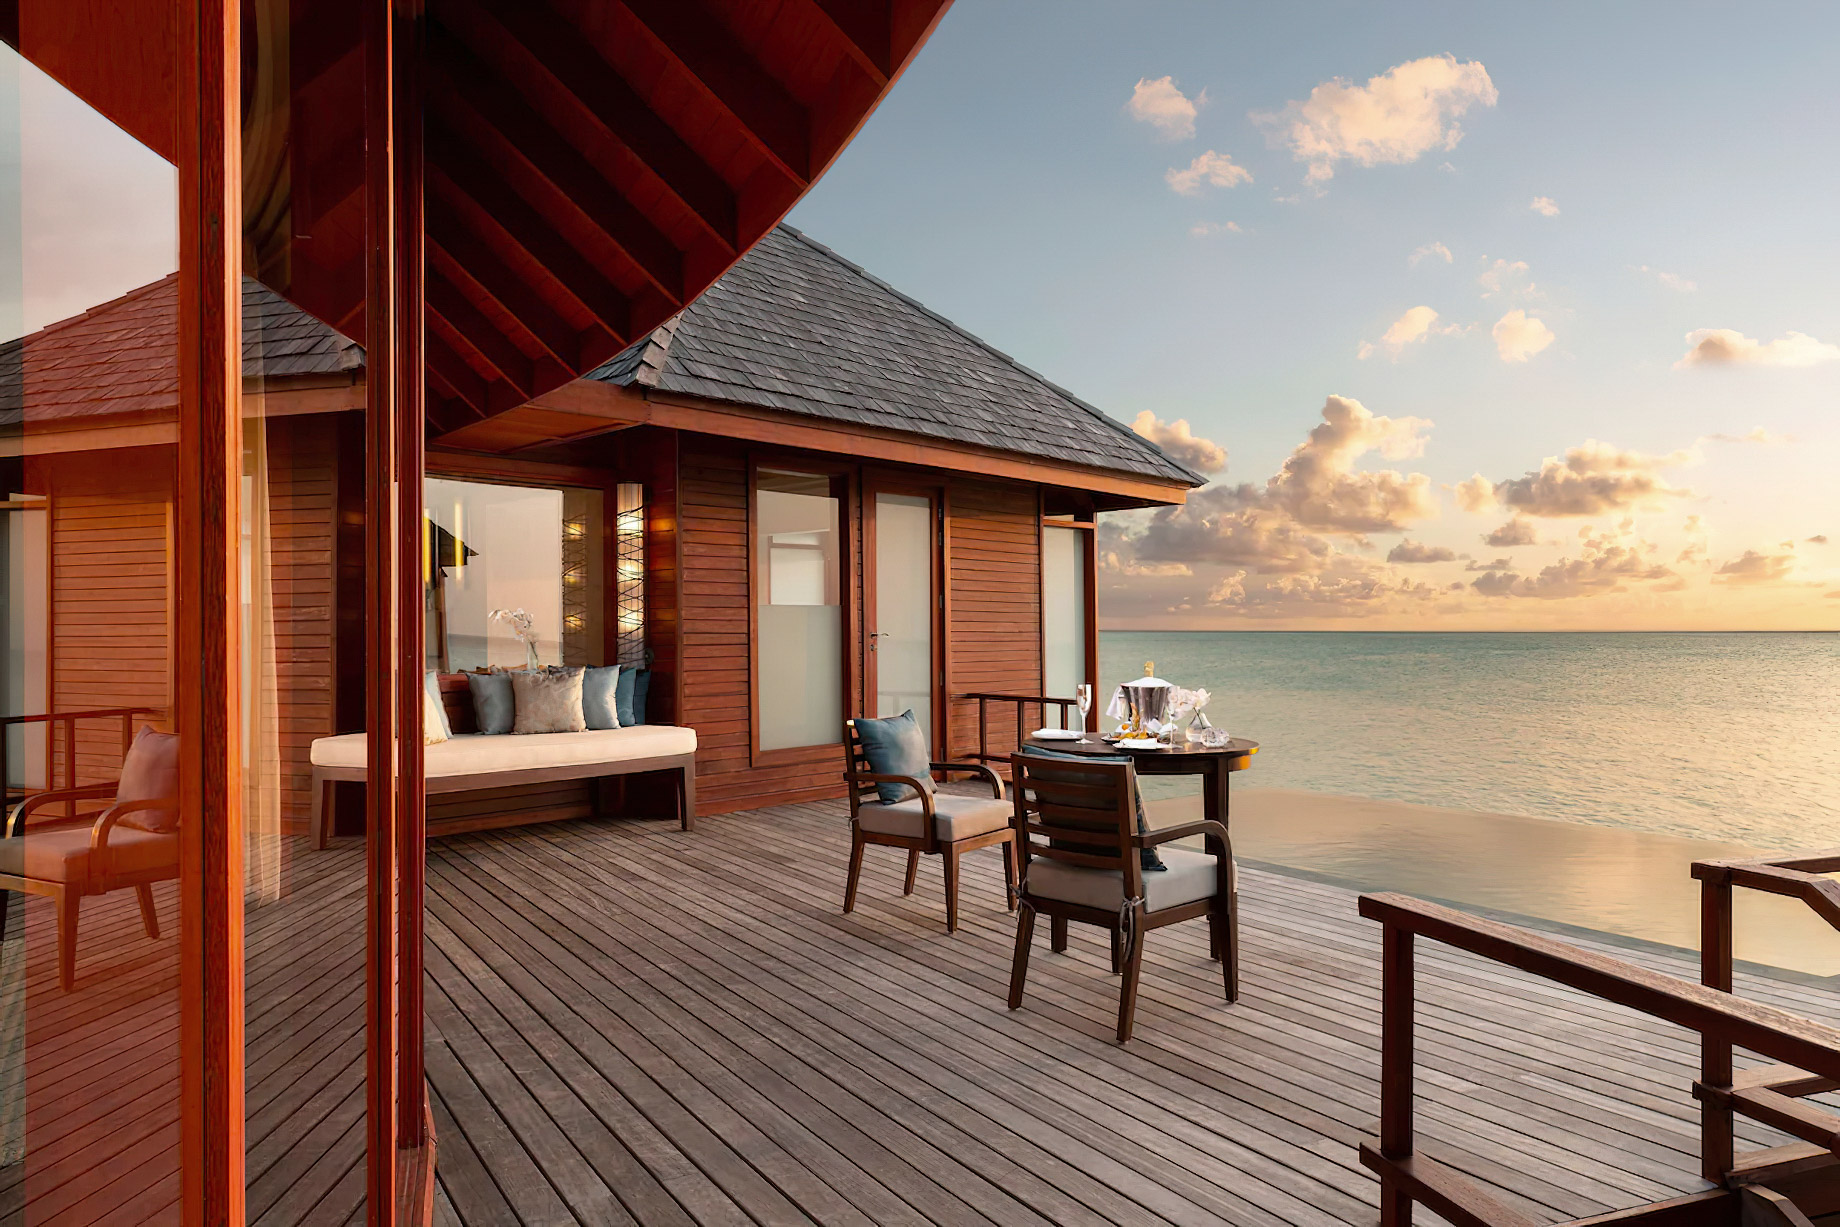 Anantara Thigu Maldives Resort – South Male Atoll, Maldives – Sunset Over Water Pool Suite Deck